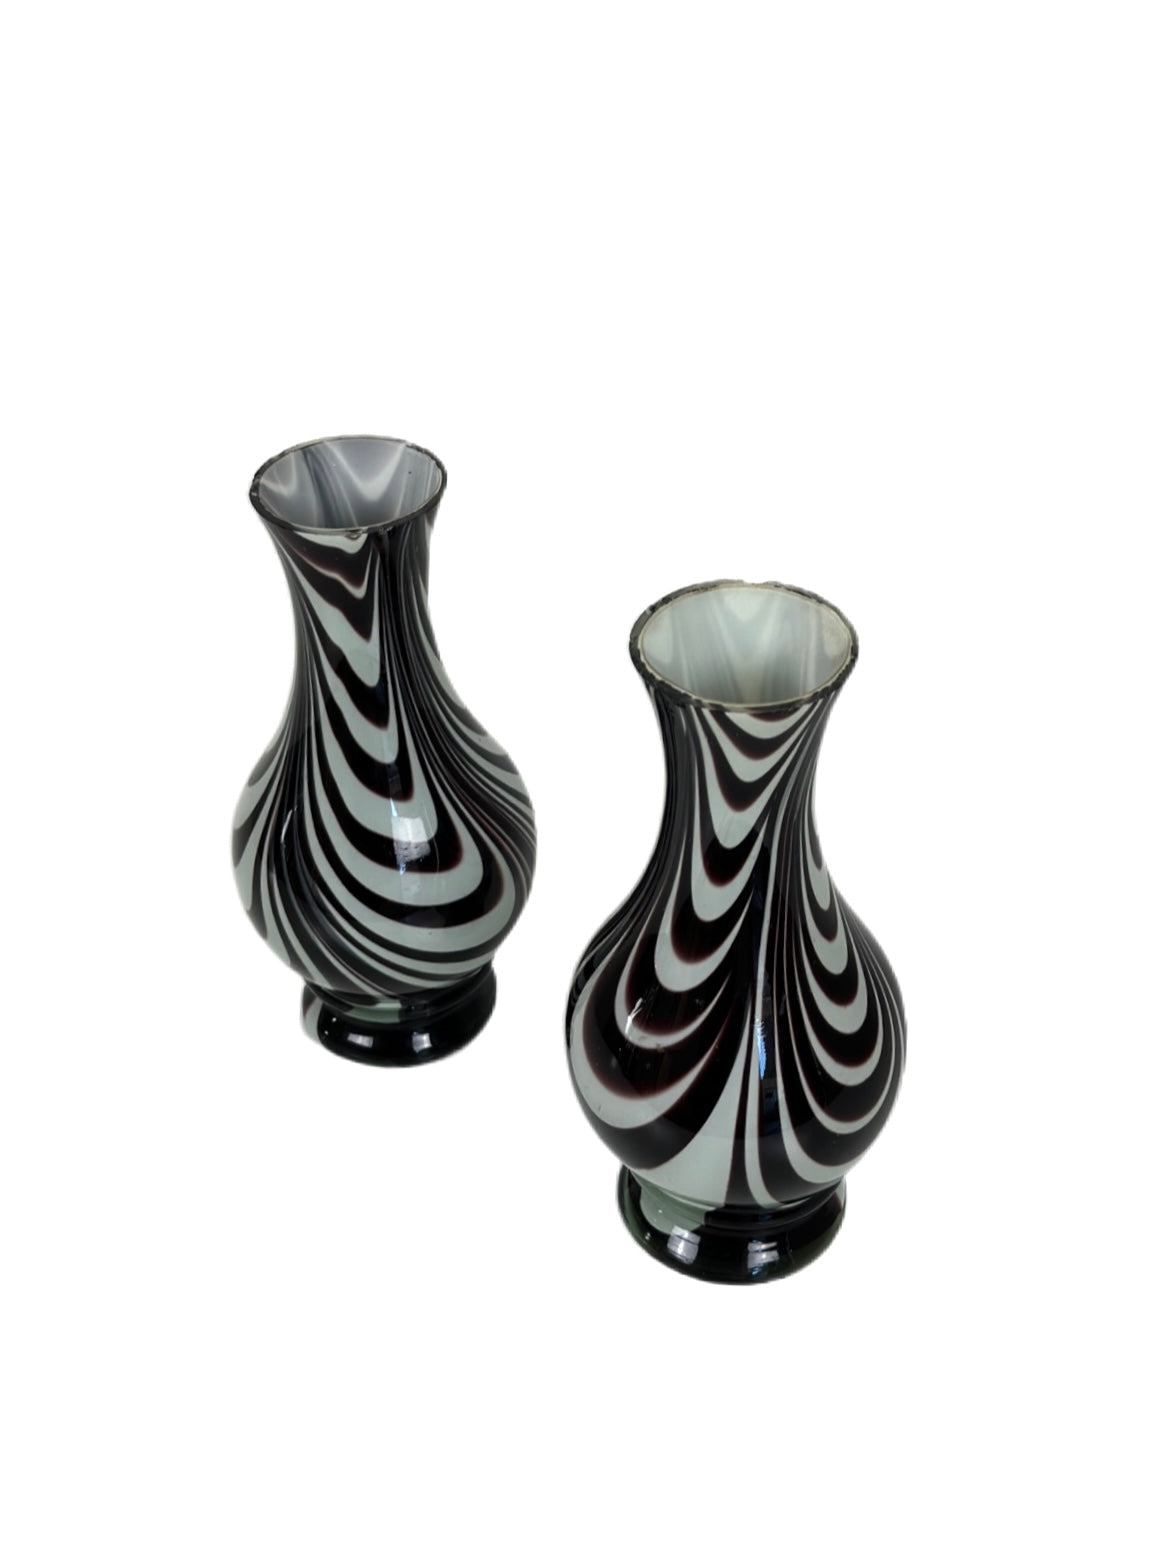 Pair Swirled vases